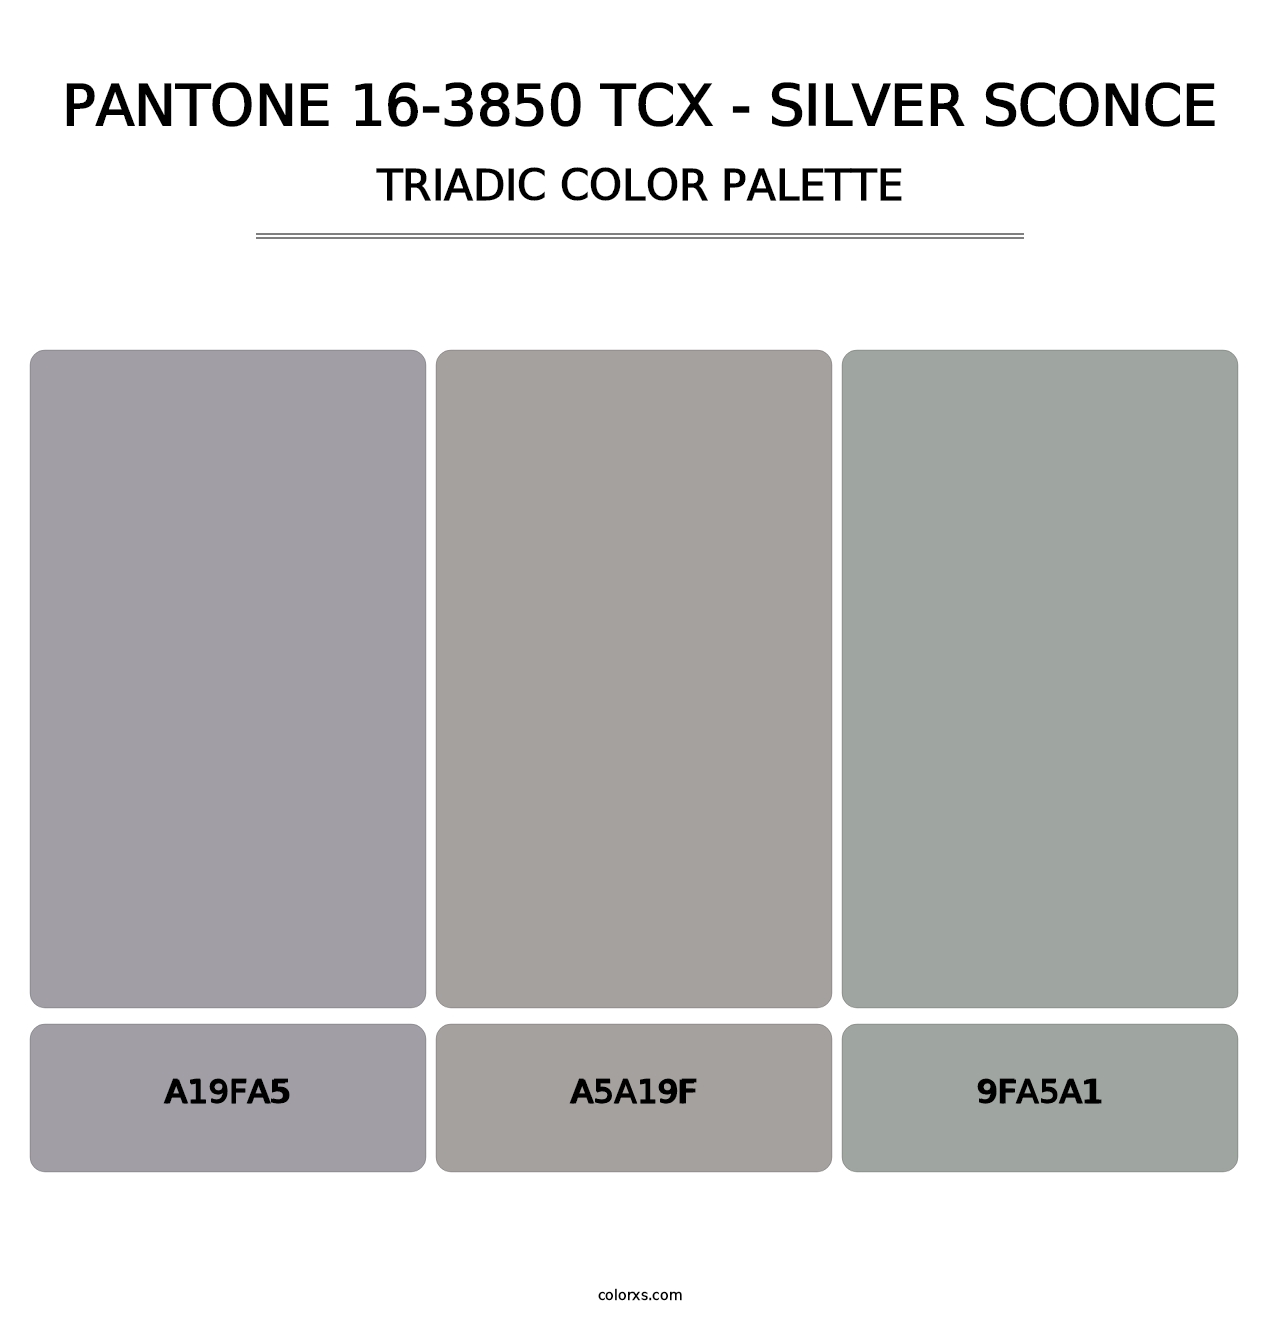 PANTONE 16-3850 TCX - Silver Sconce - Triadic Color Palette